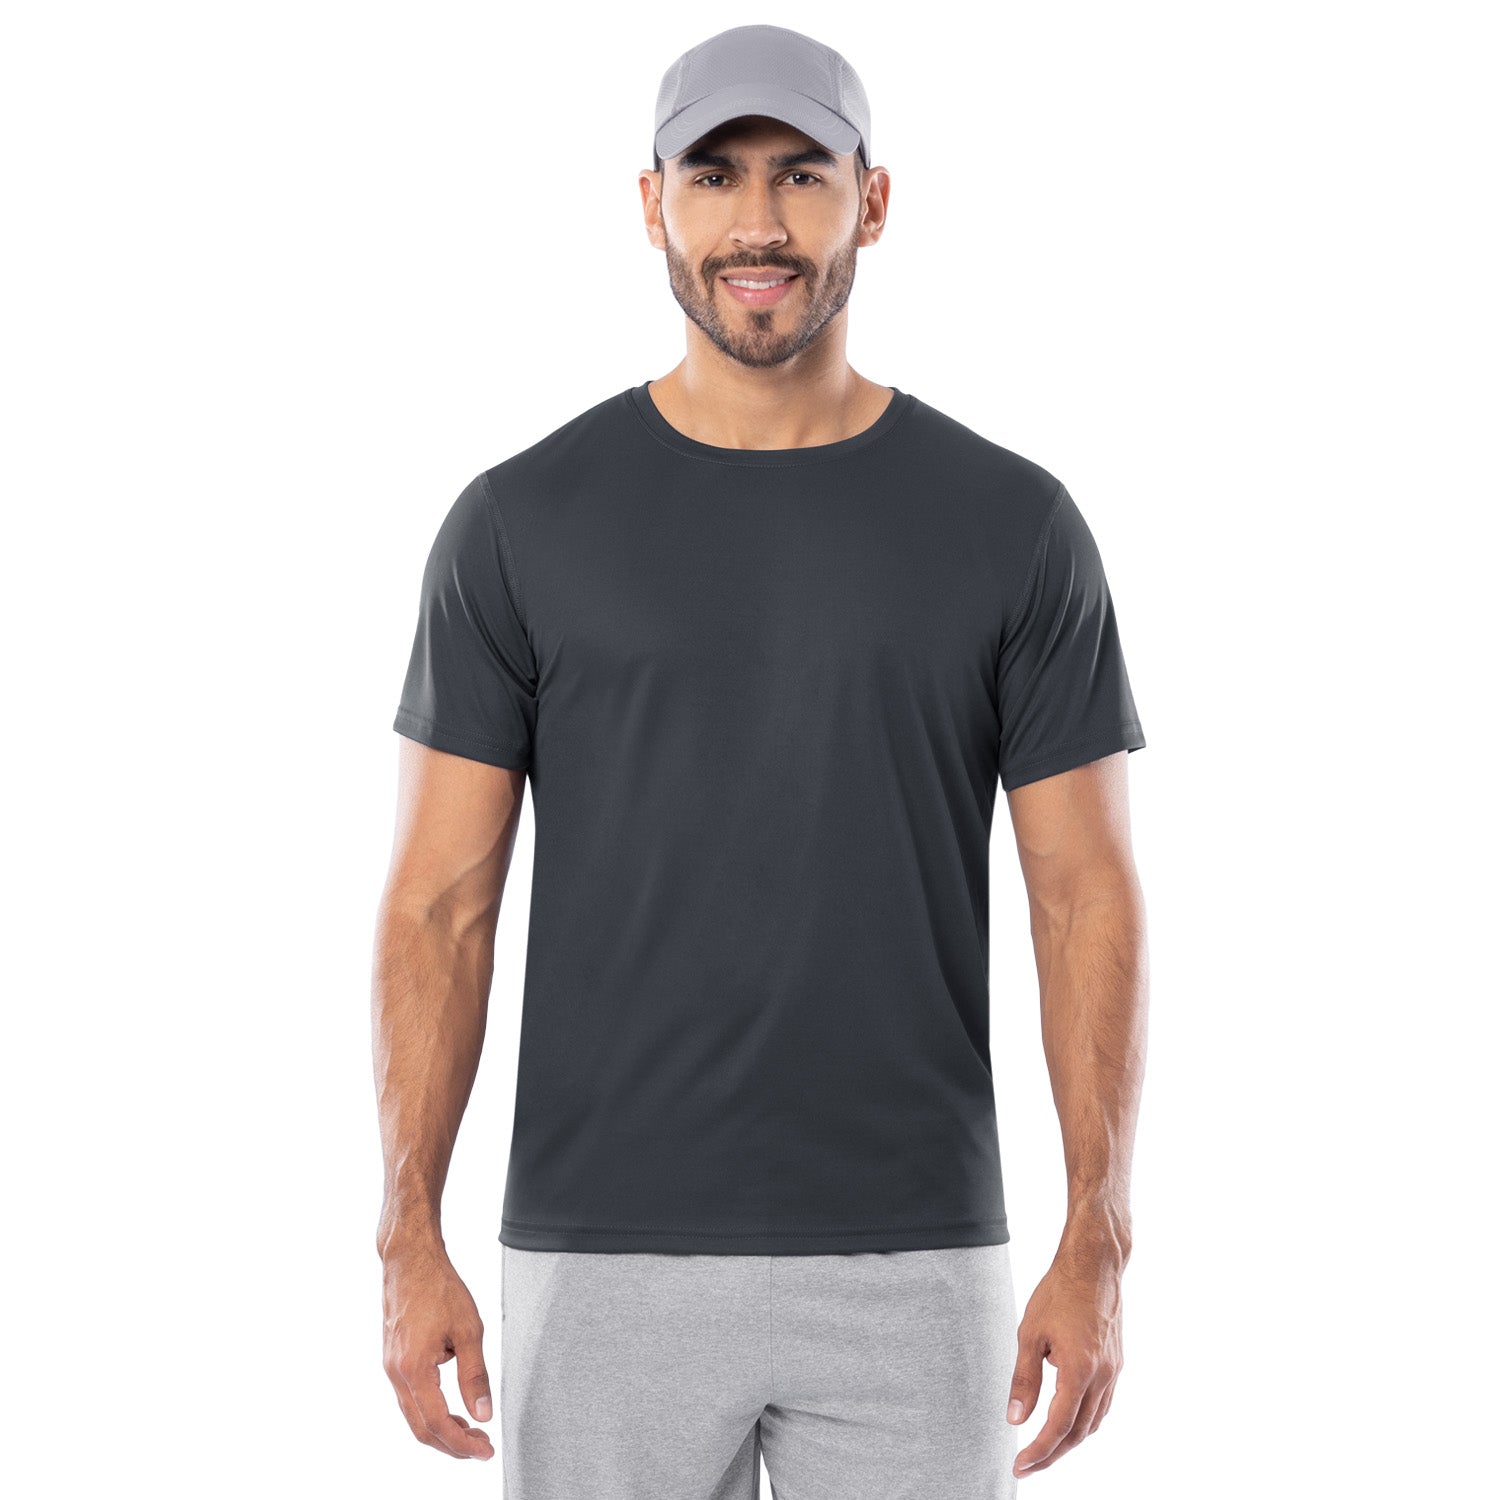 Men's Dark Grey Training T-Shirt Front View